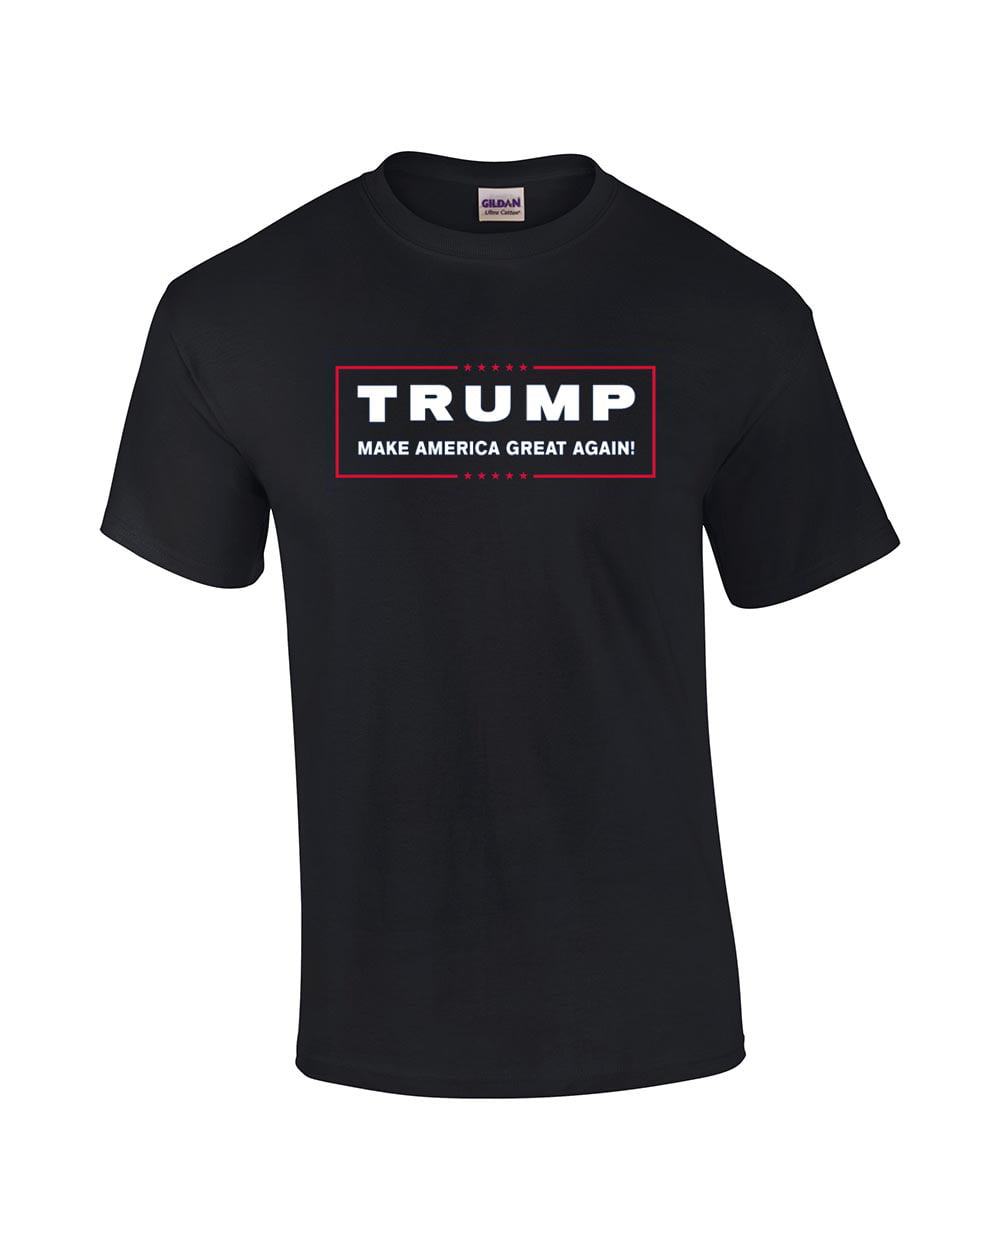 Authentic Original 2016 President TRUMP Campaign Political T-shirt Mens Sz XL 